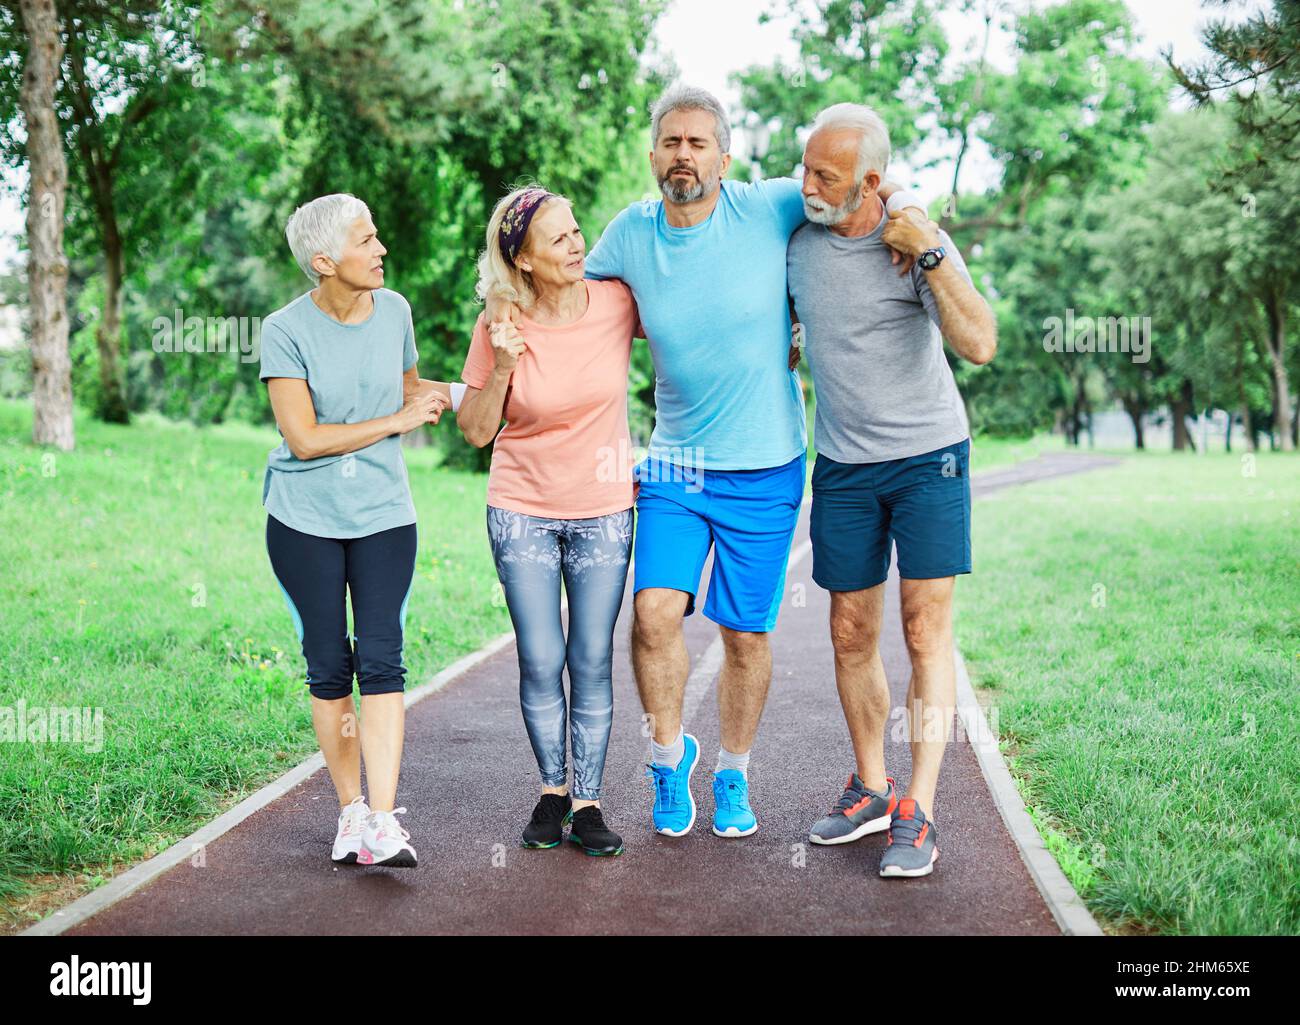 outdoor senior fitness woman man lifestyle active sport exercise injury pain ache leg knee ancle Stock Photo